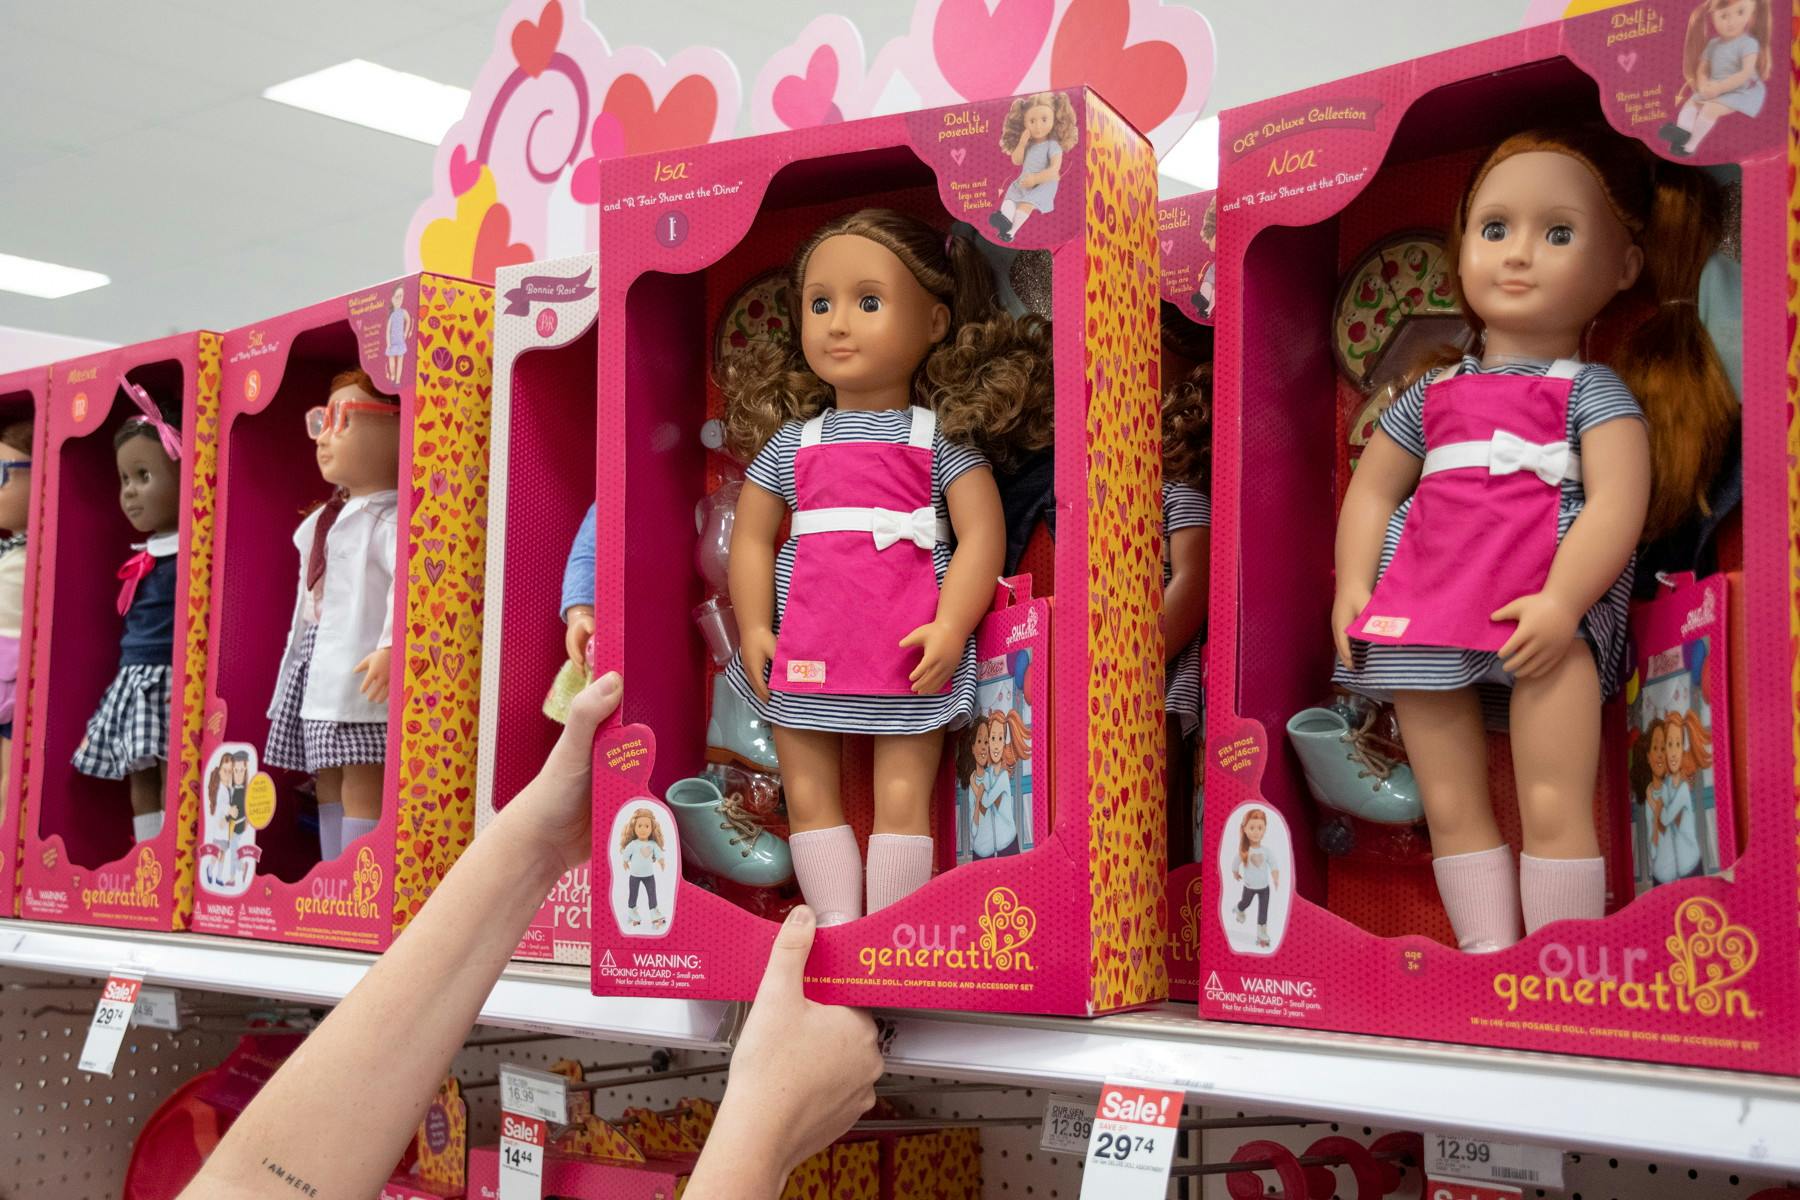 dolls at target like american girl